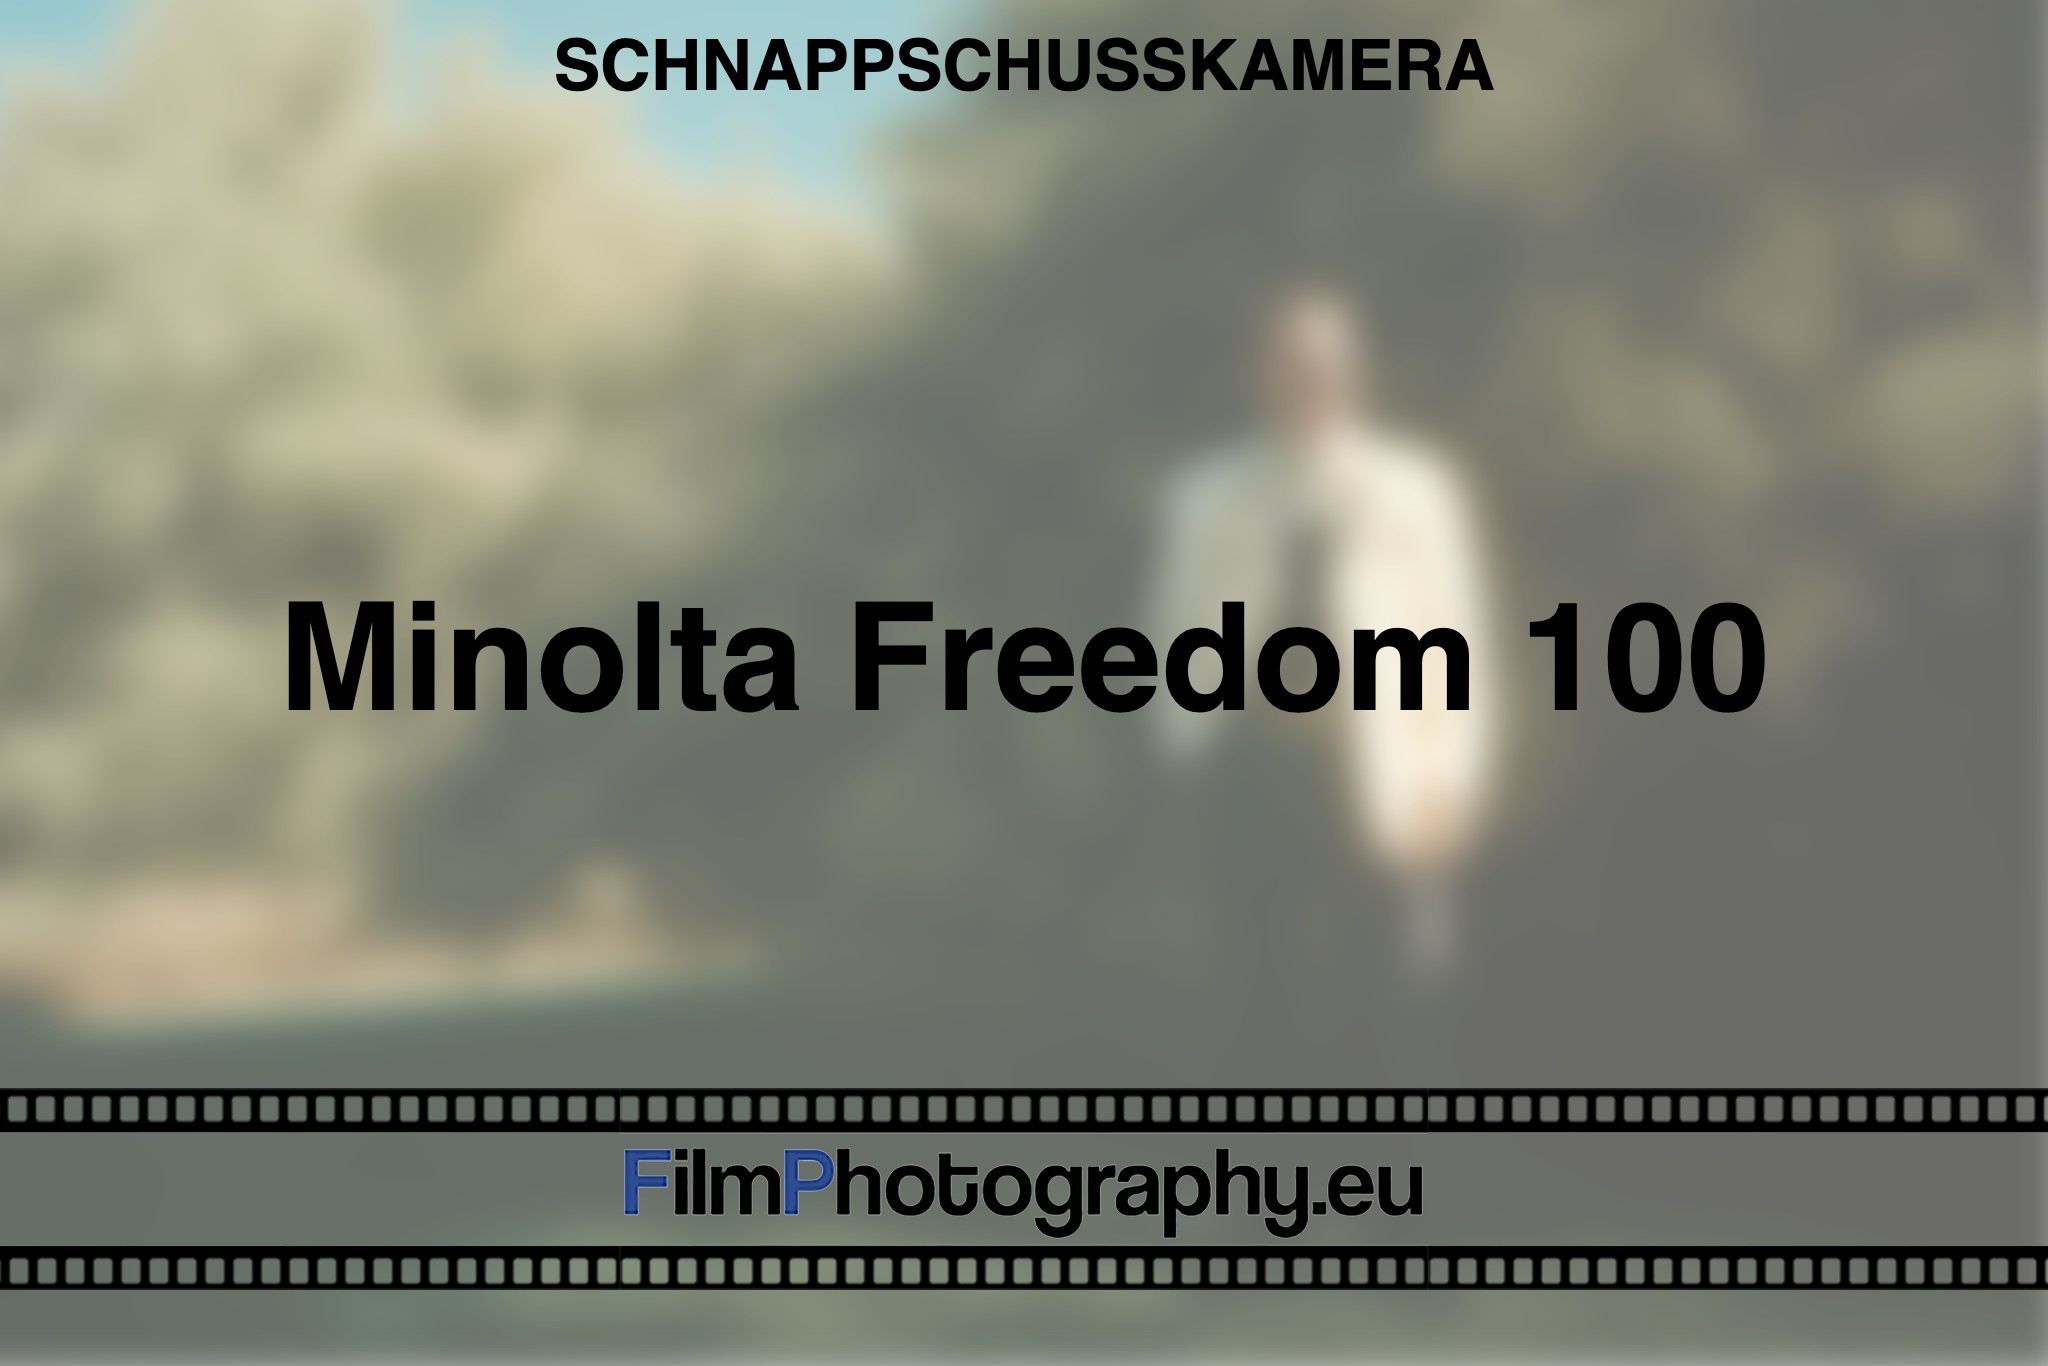 minolta-freedom-100-schnappschusskamera-bnv